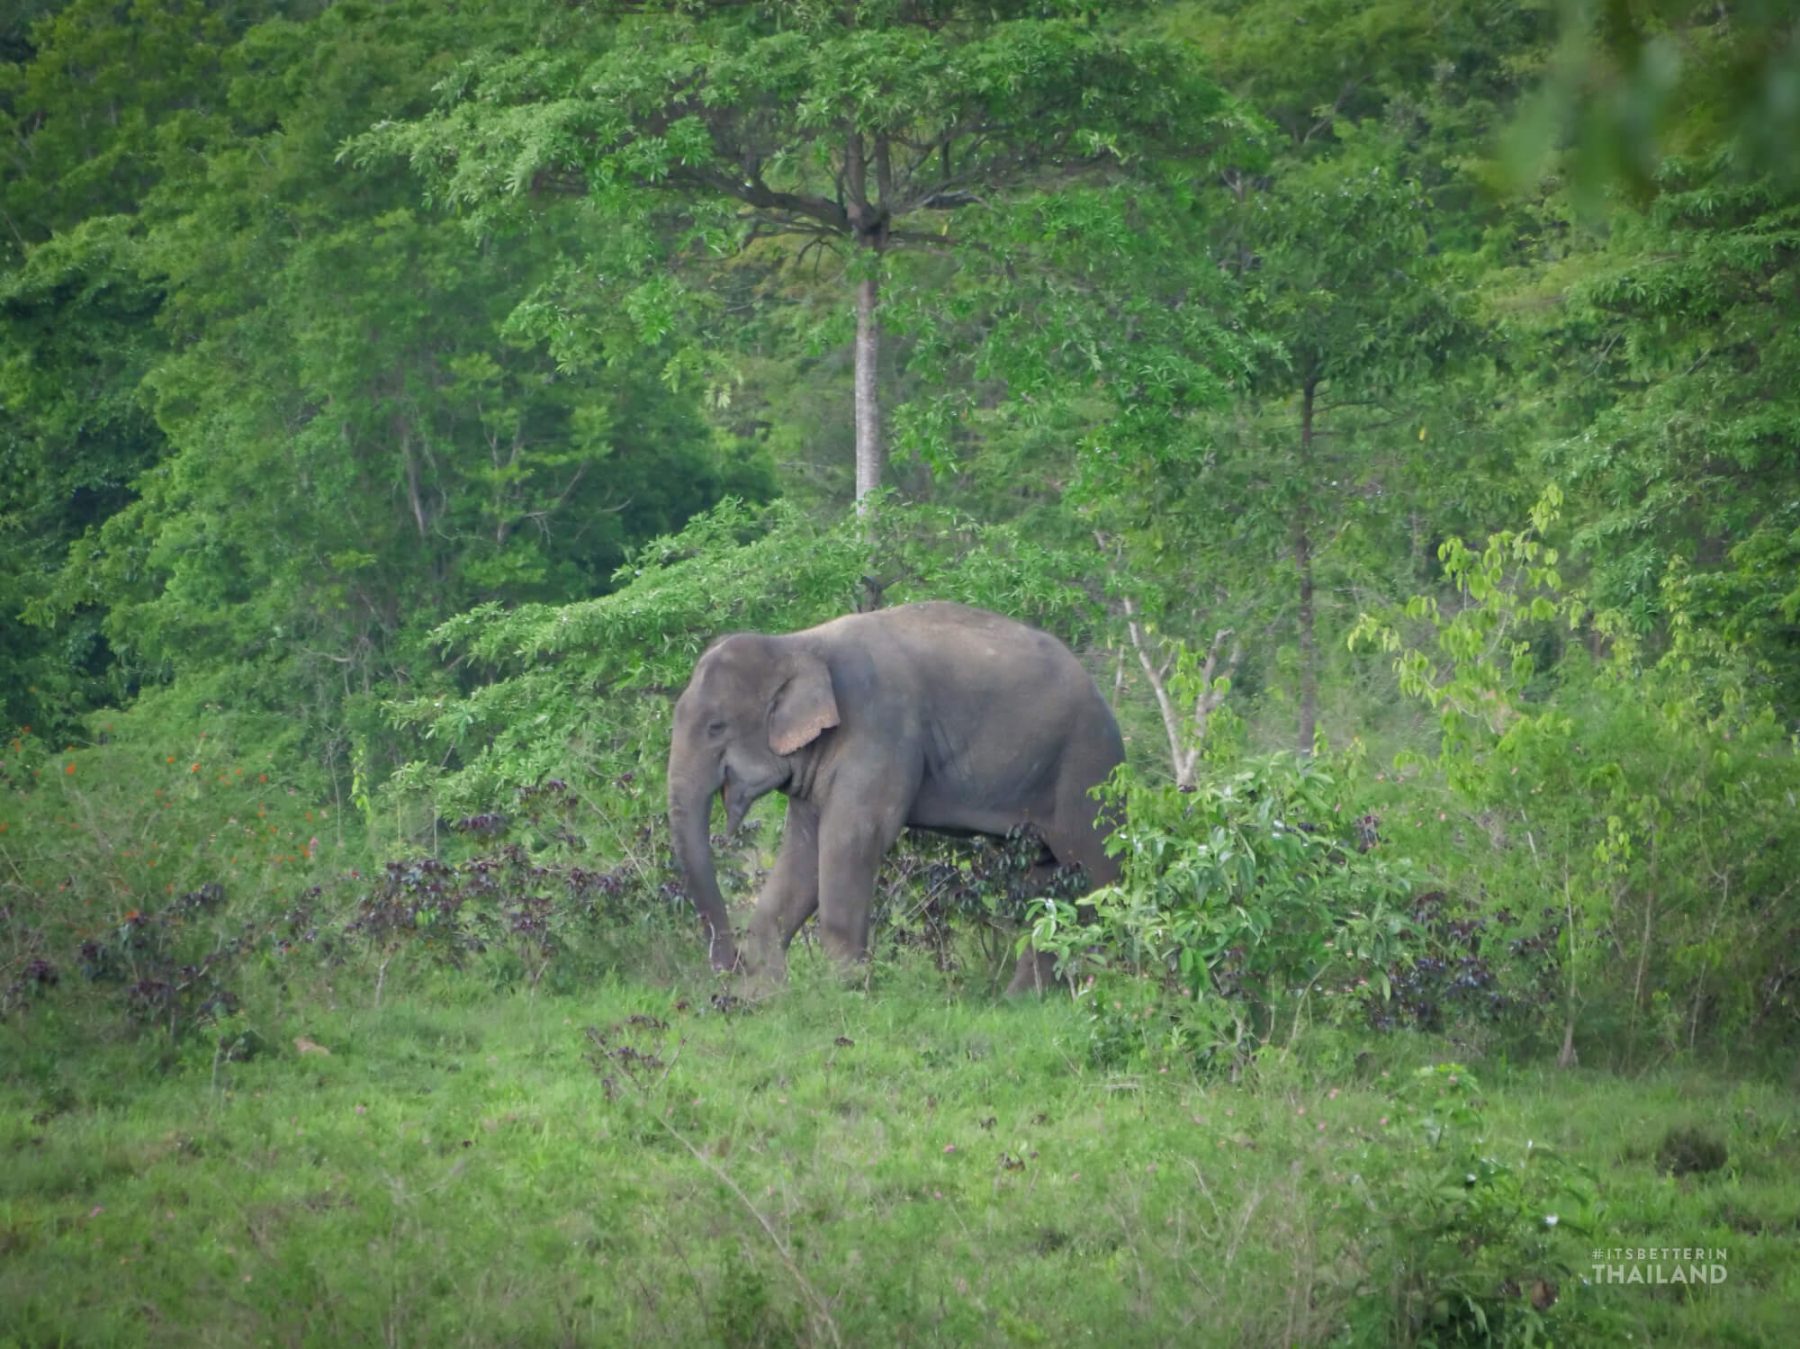 Wild elephant in Thailand